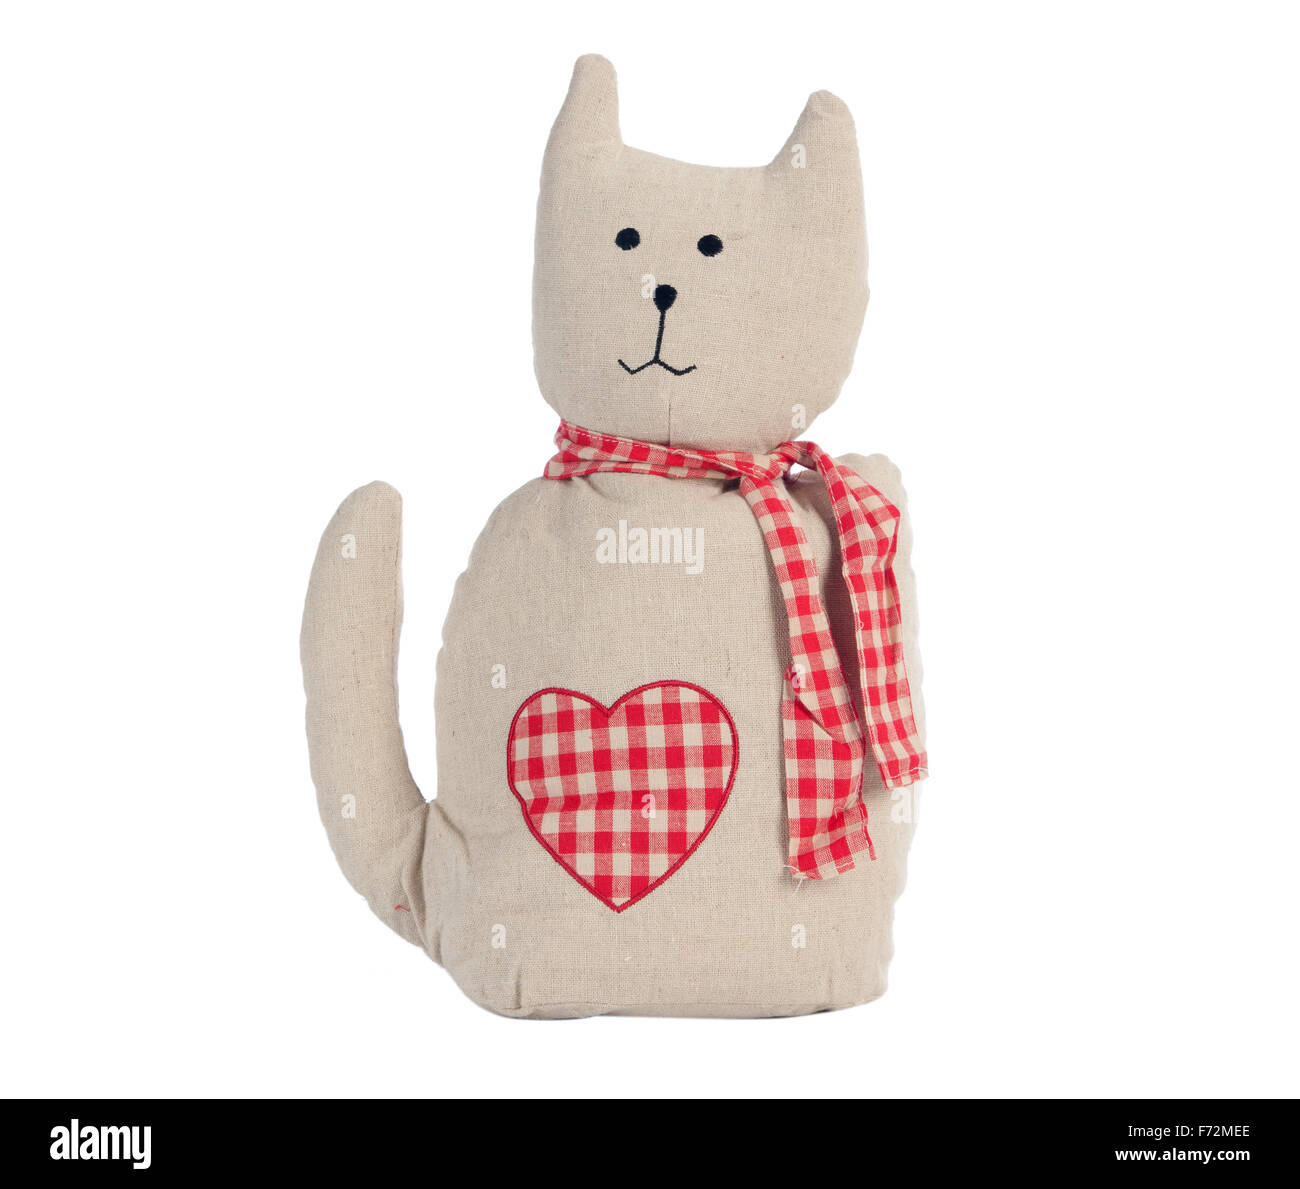 Gracioso gato juguete artesanal aislado en blanco, tela de patrón Foto de stock